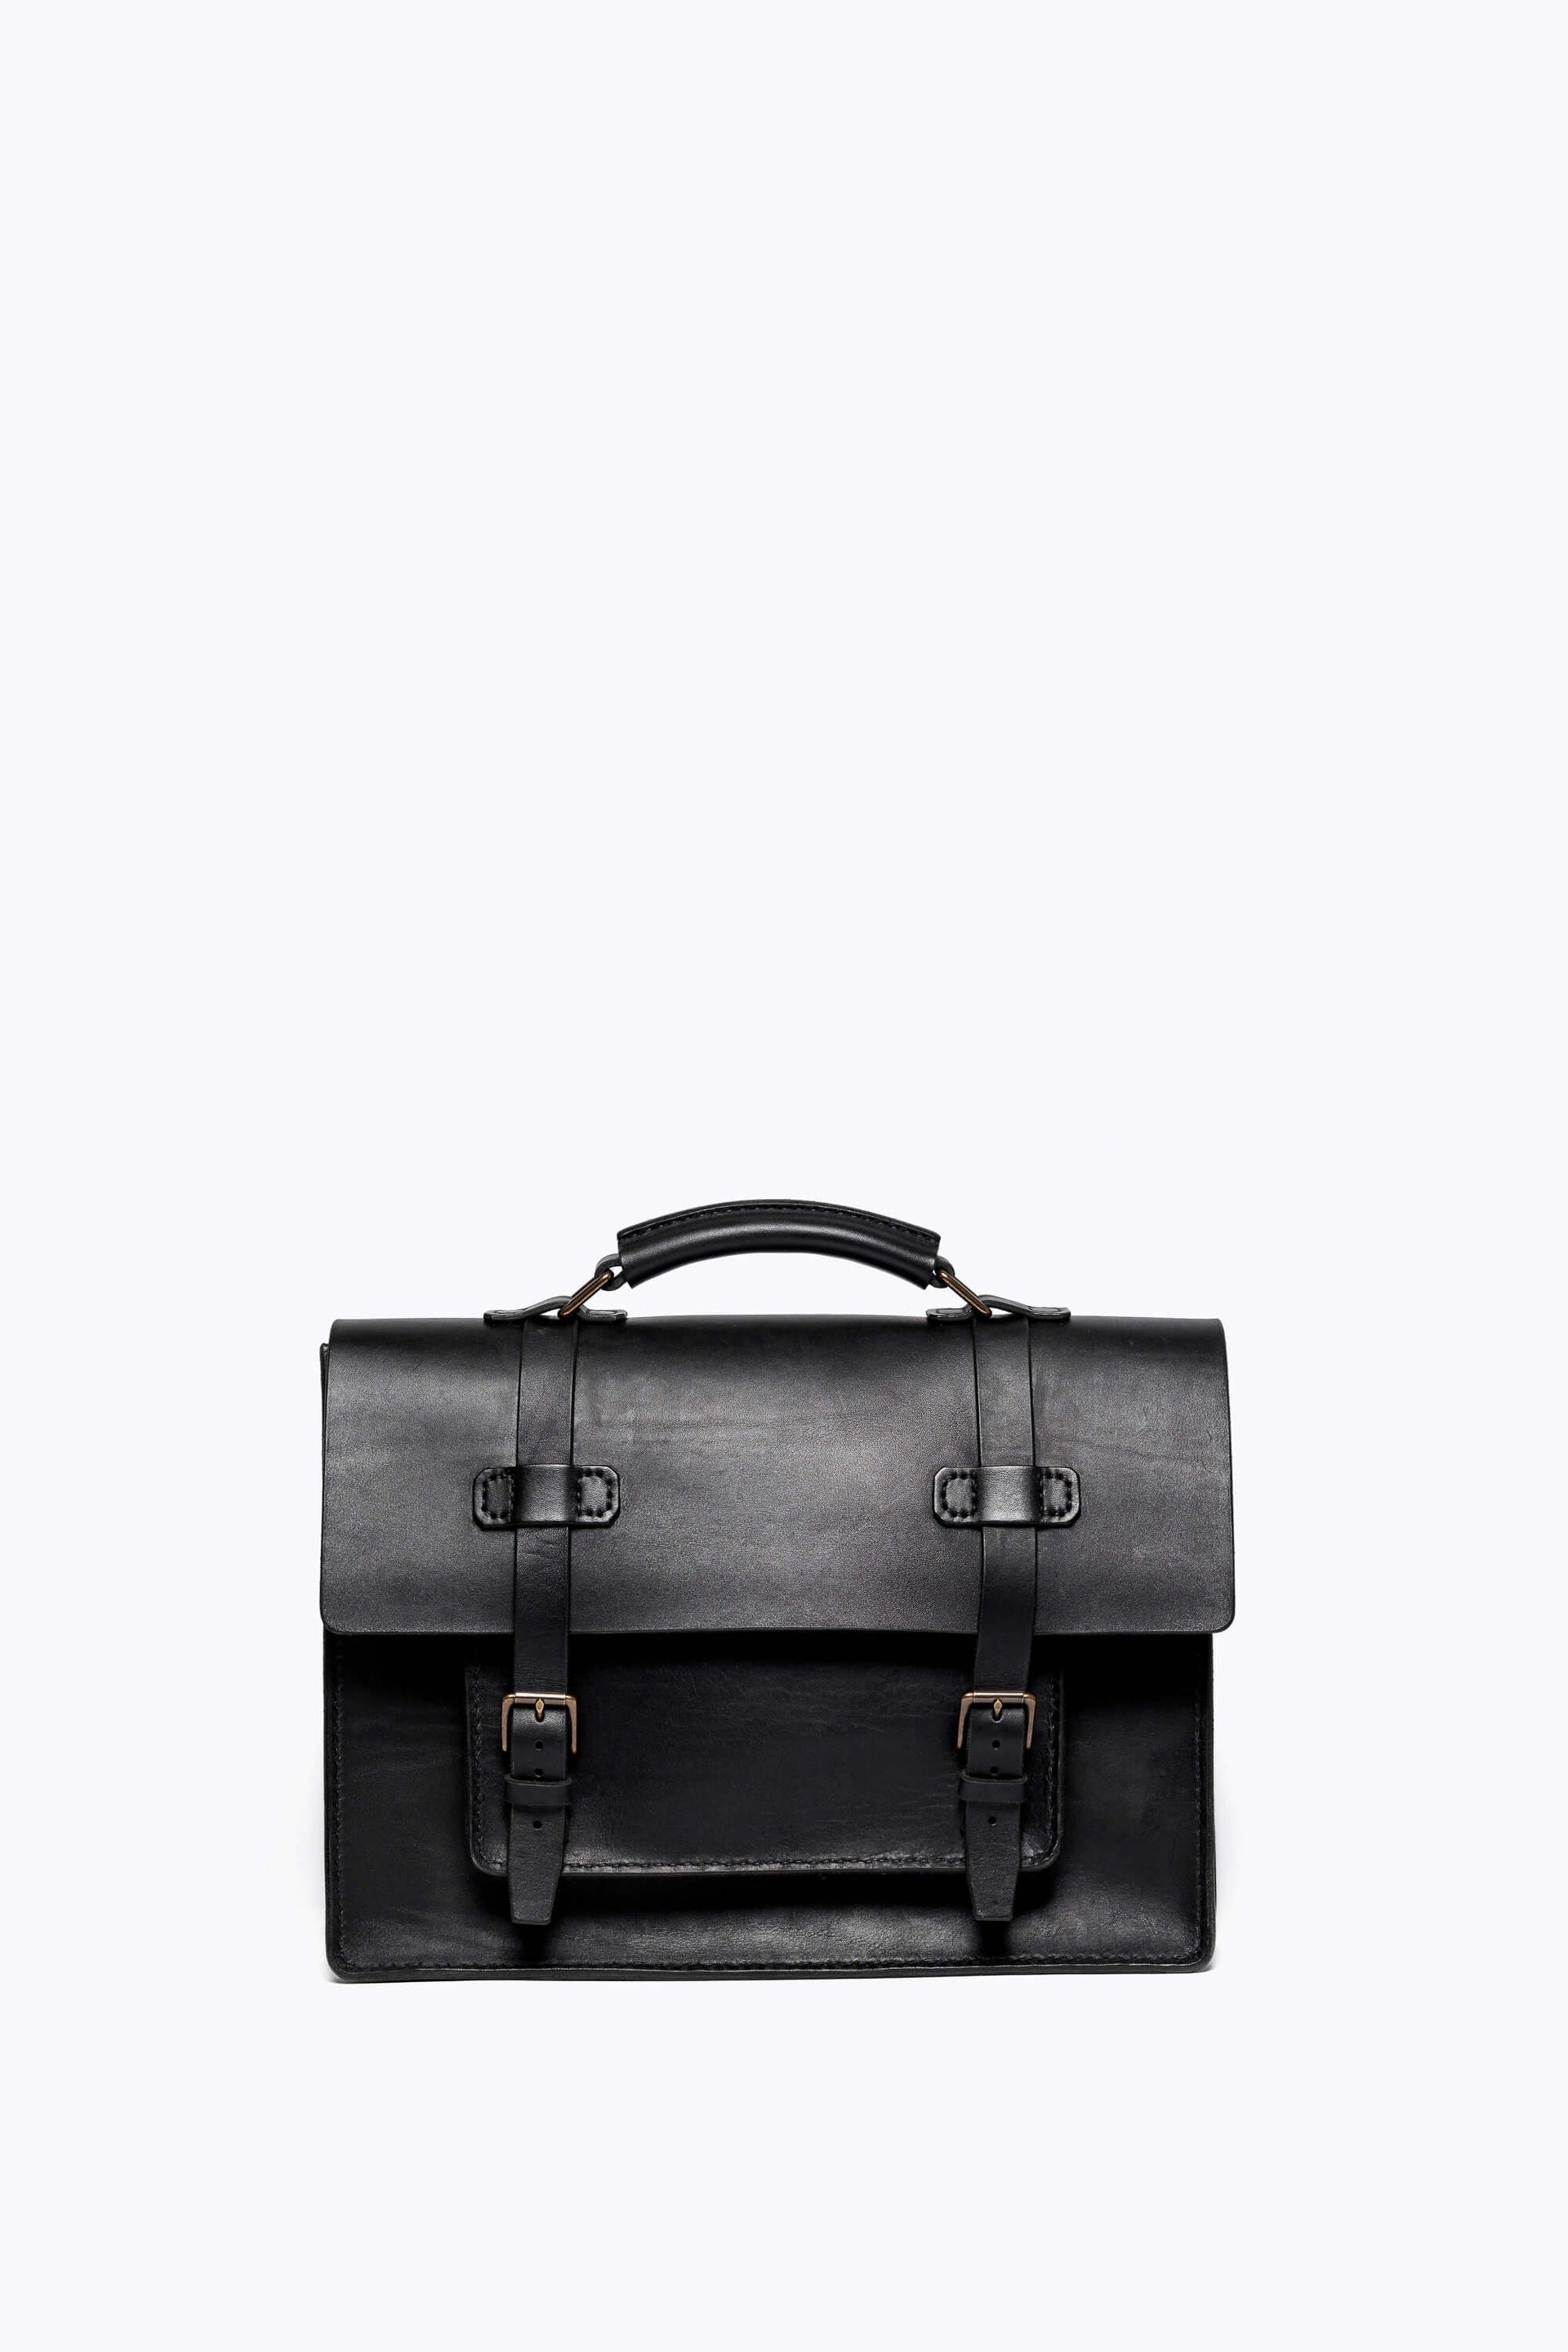 BennyBee Leather Messenger Bag 15" Black